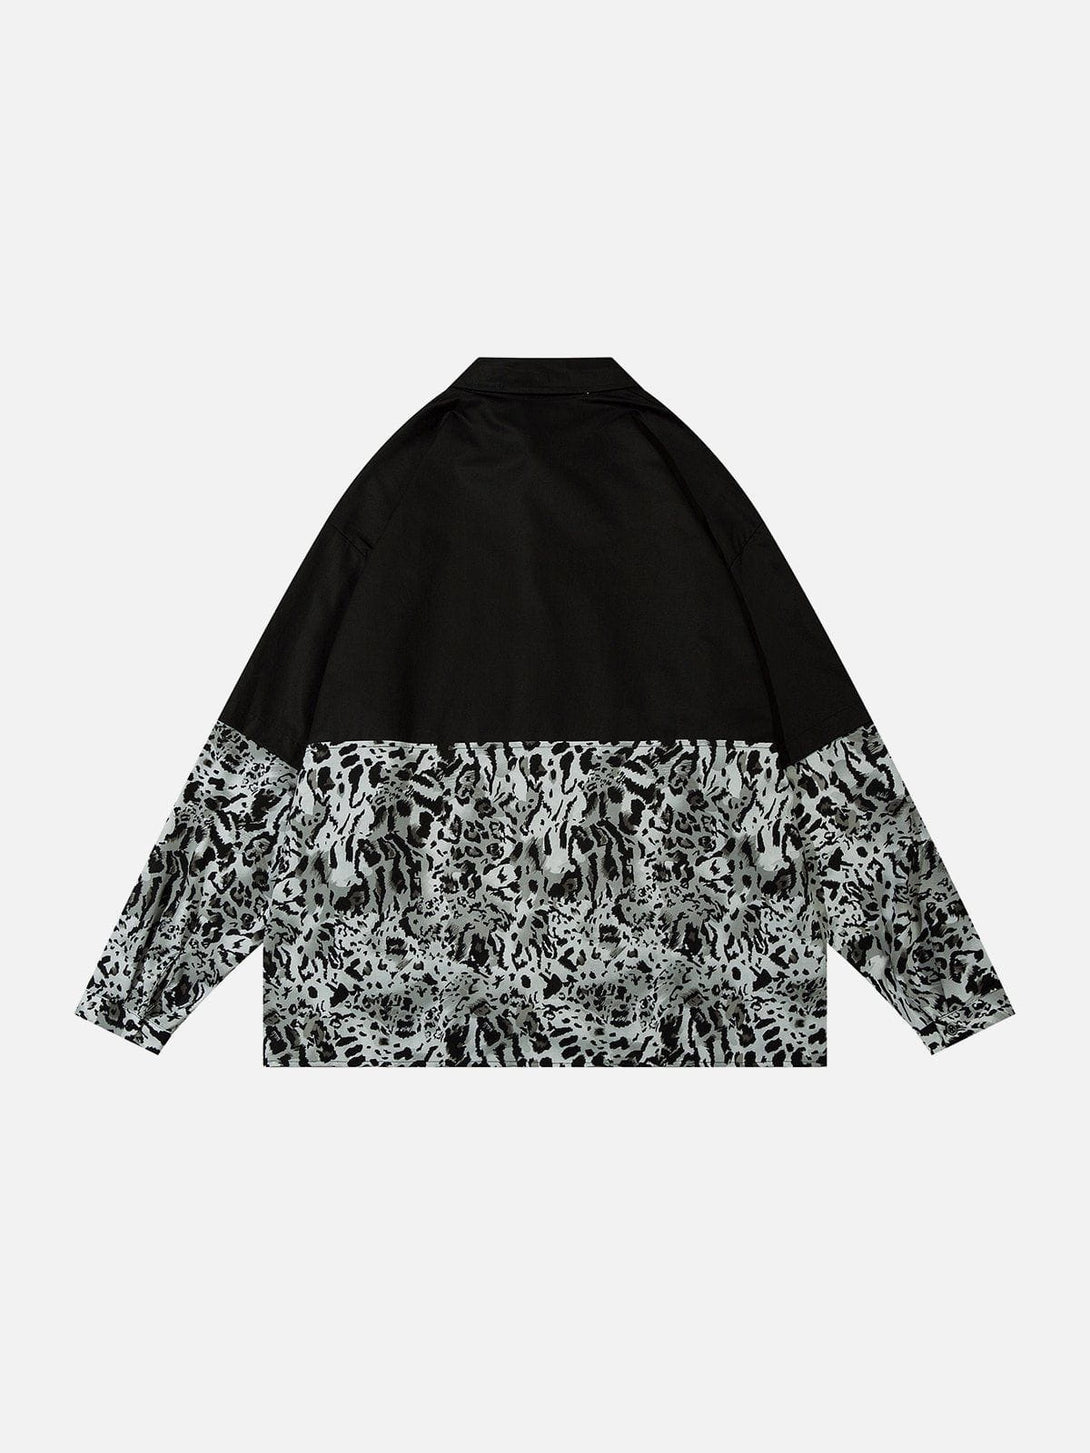 Majesda® - Leopard Print Paneled Long Sleeve Shirt outfit ideas streetwear fashion